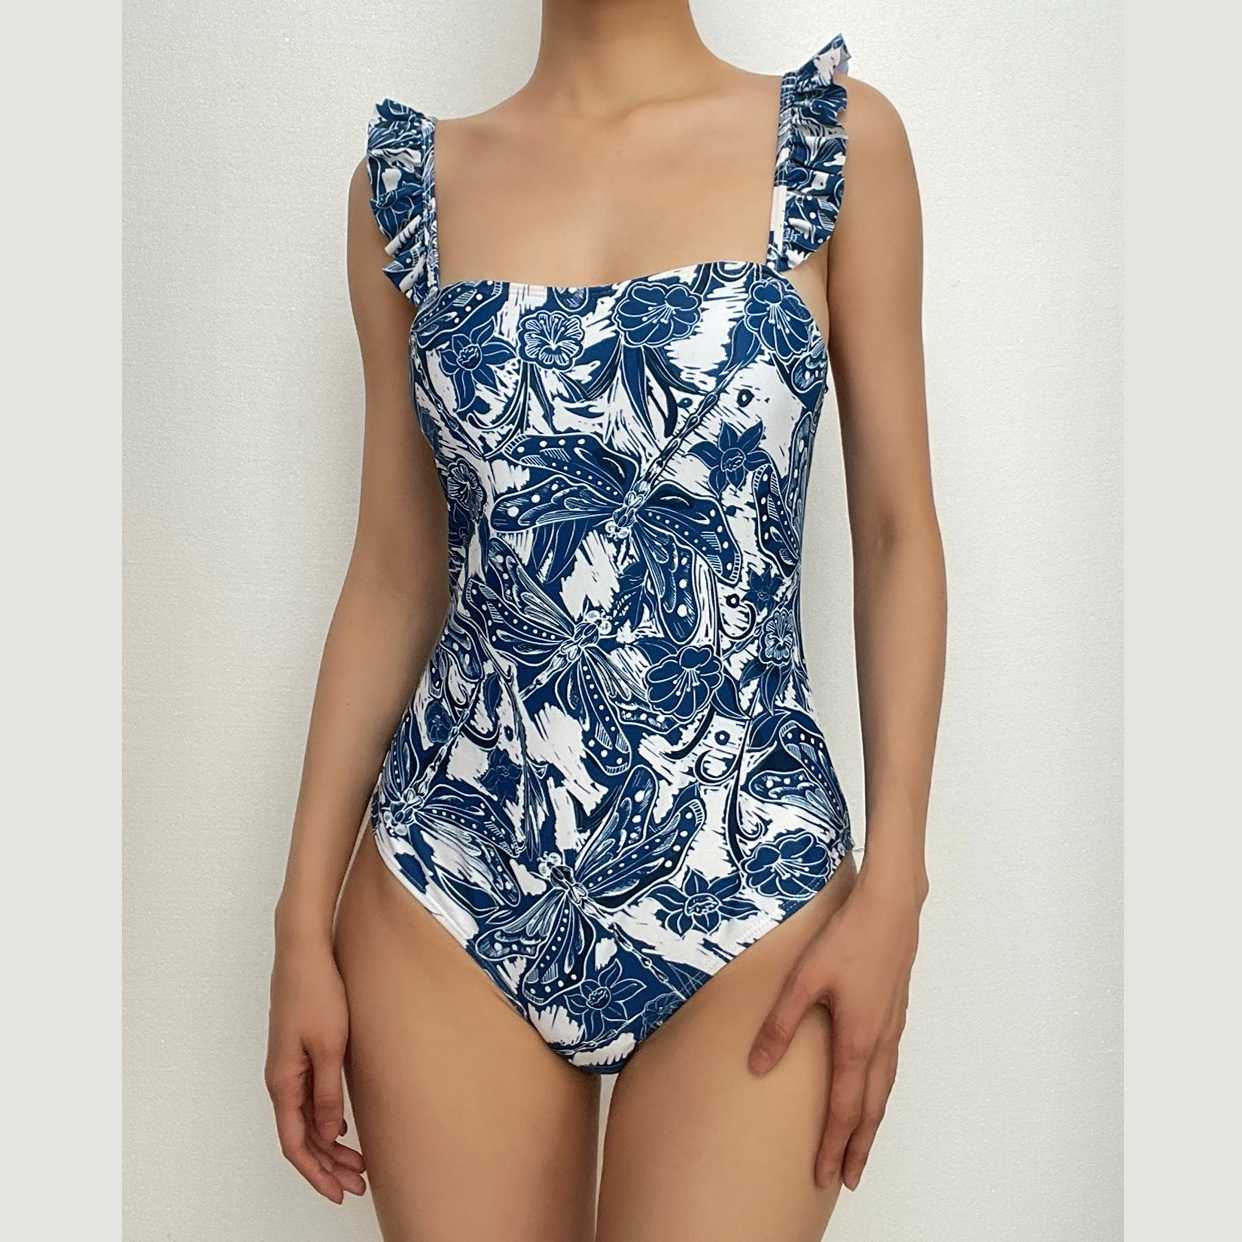 Contrast abstract print ruffle one piece swimwear with beach skirt